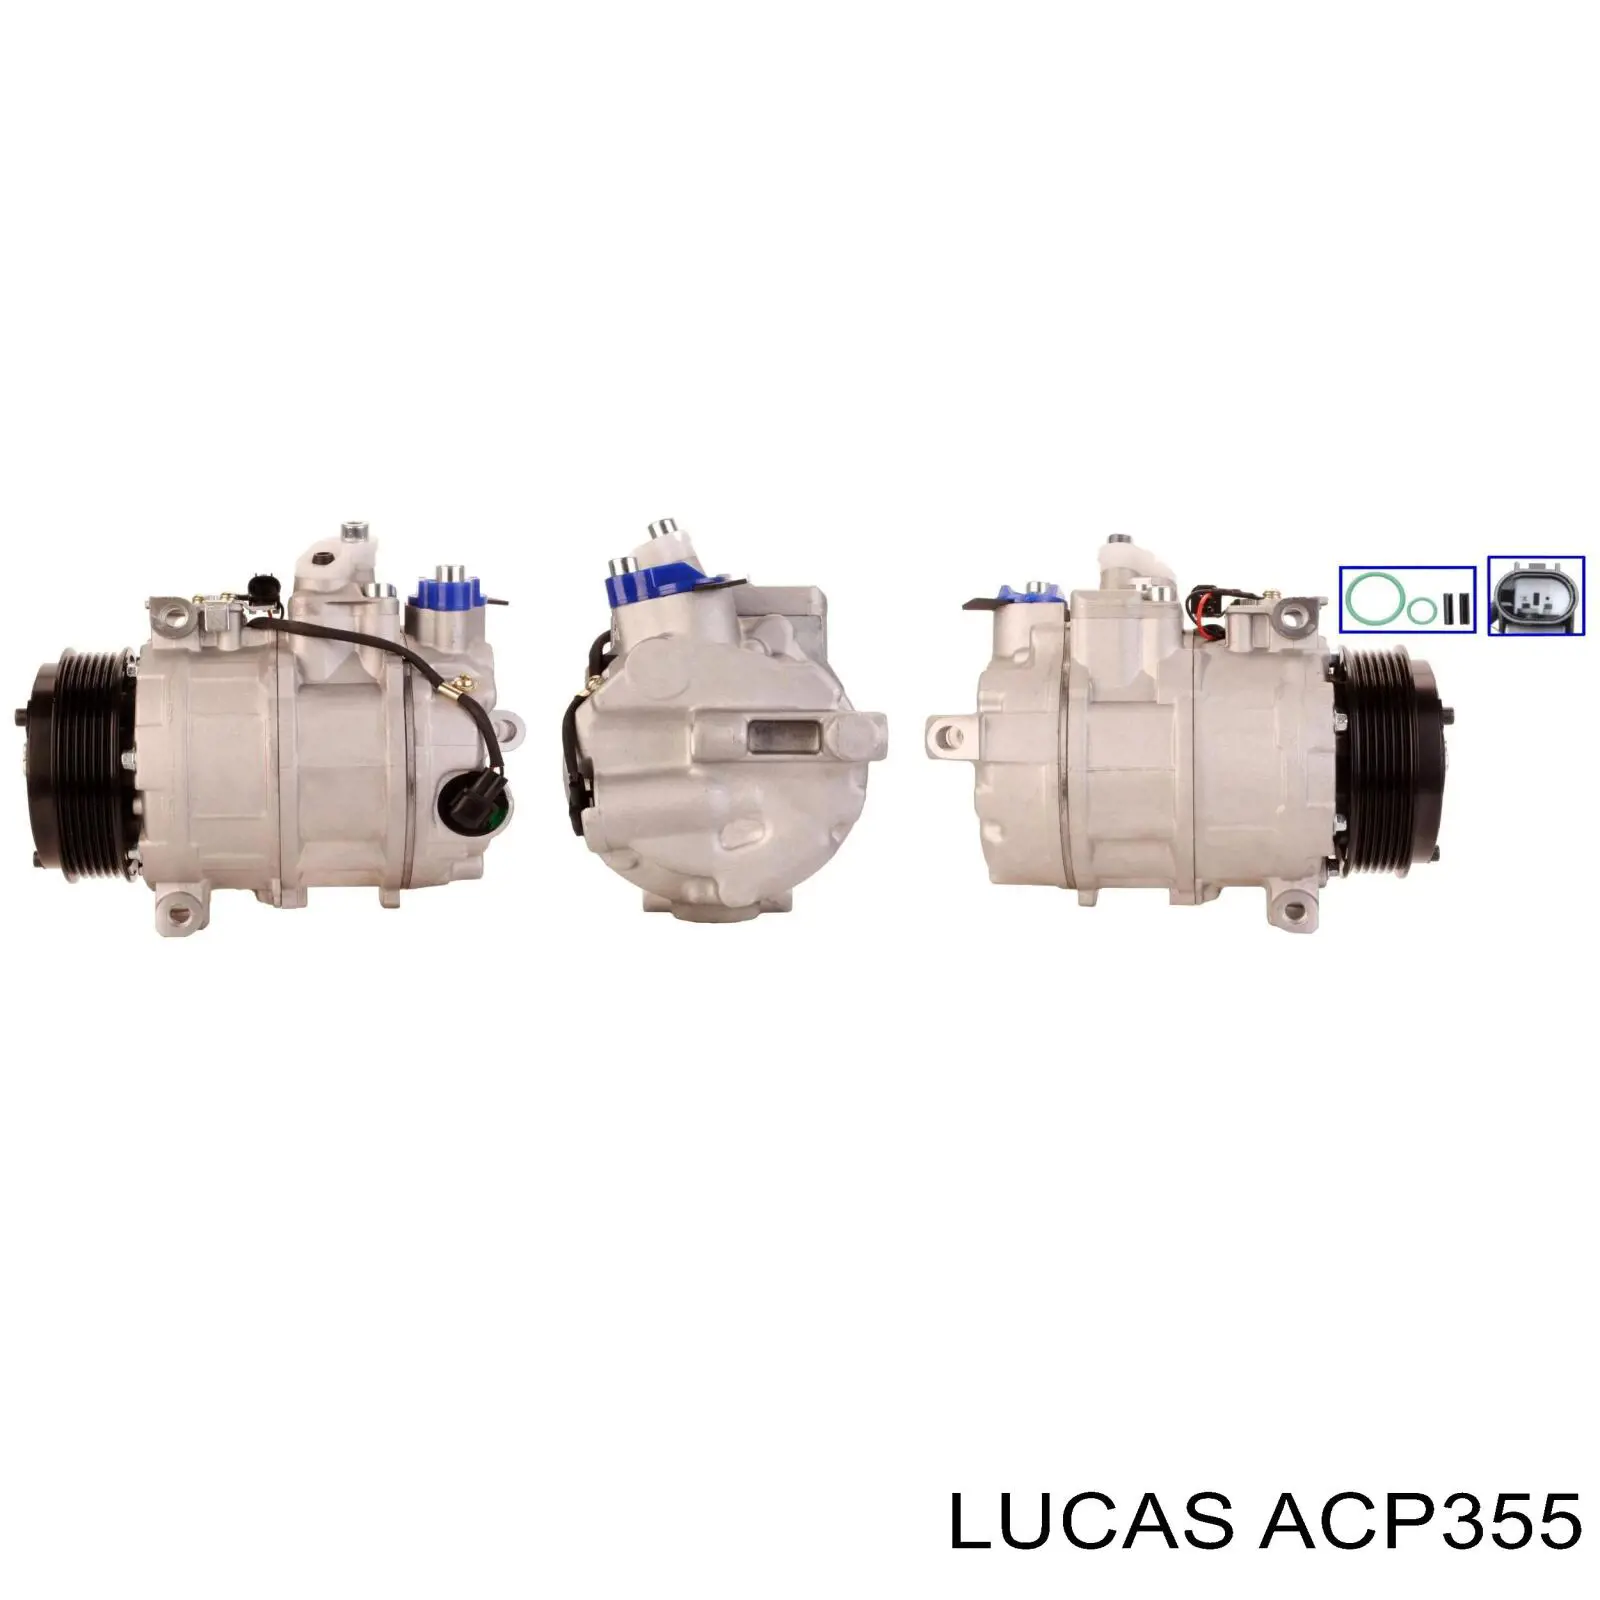 Compresor de aire acondicionado ACP355 Lucas